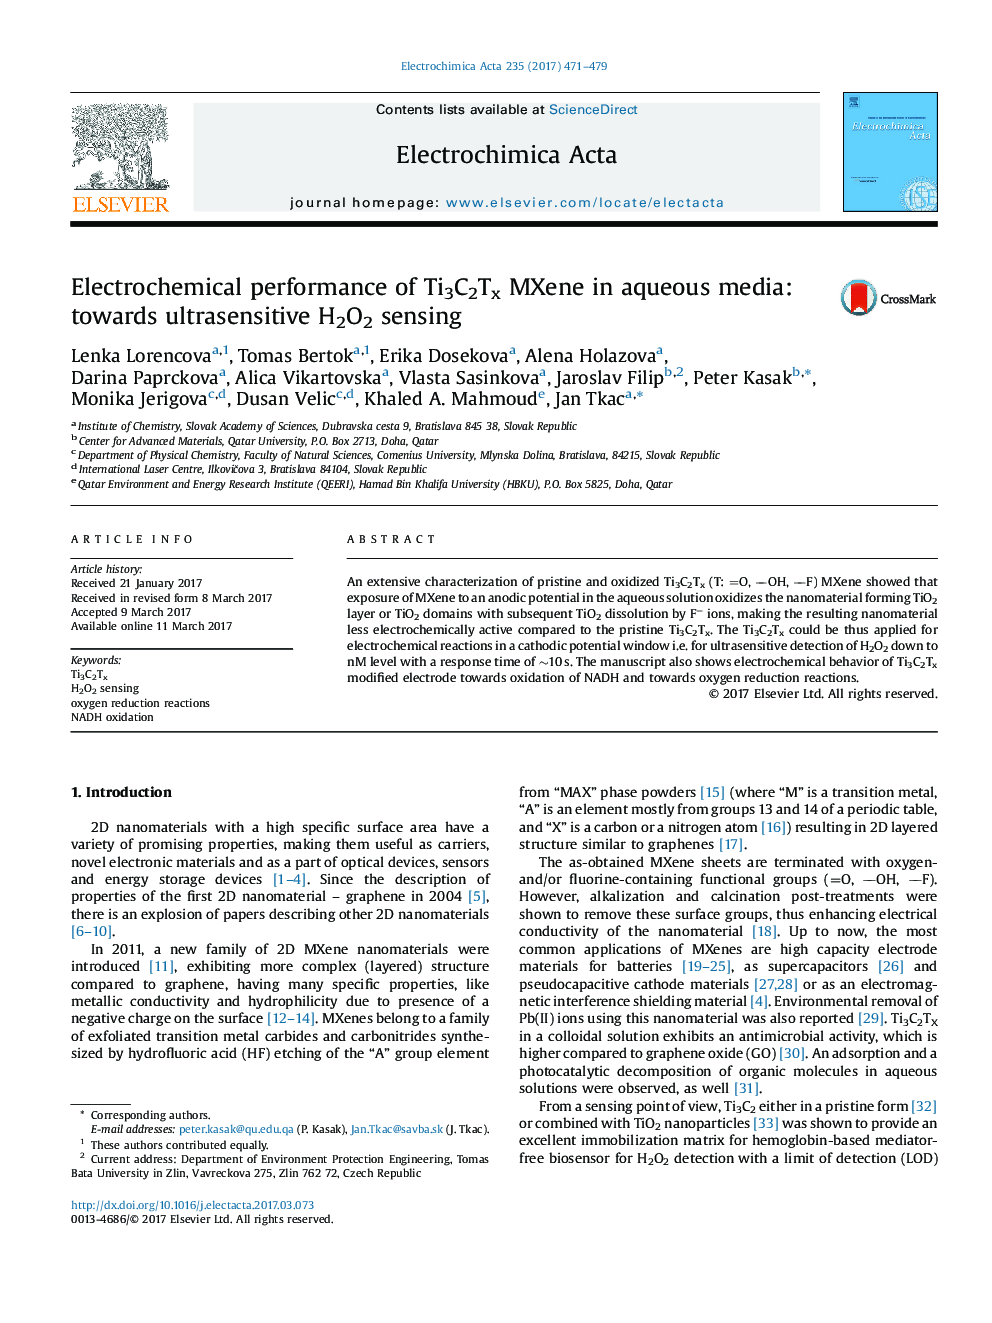 Electrochemical performance of Ti3C2Tx MXene in aqueous media: towards ultrasensitive H2O2 sensing